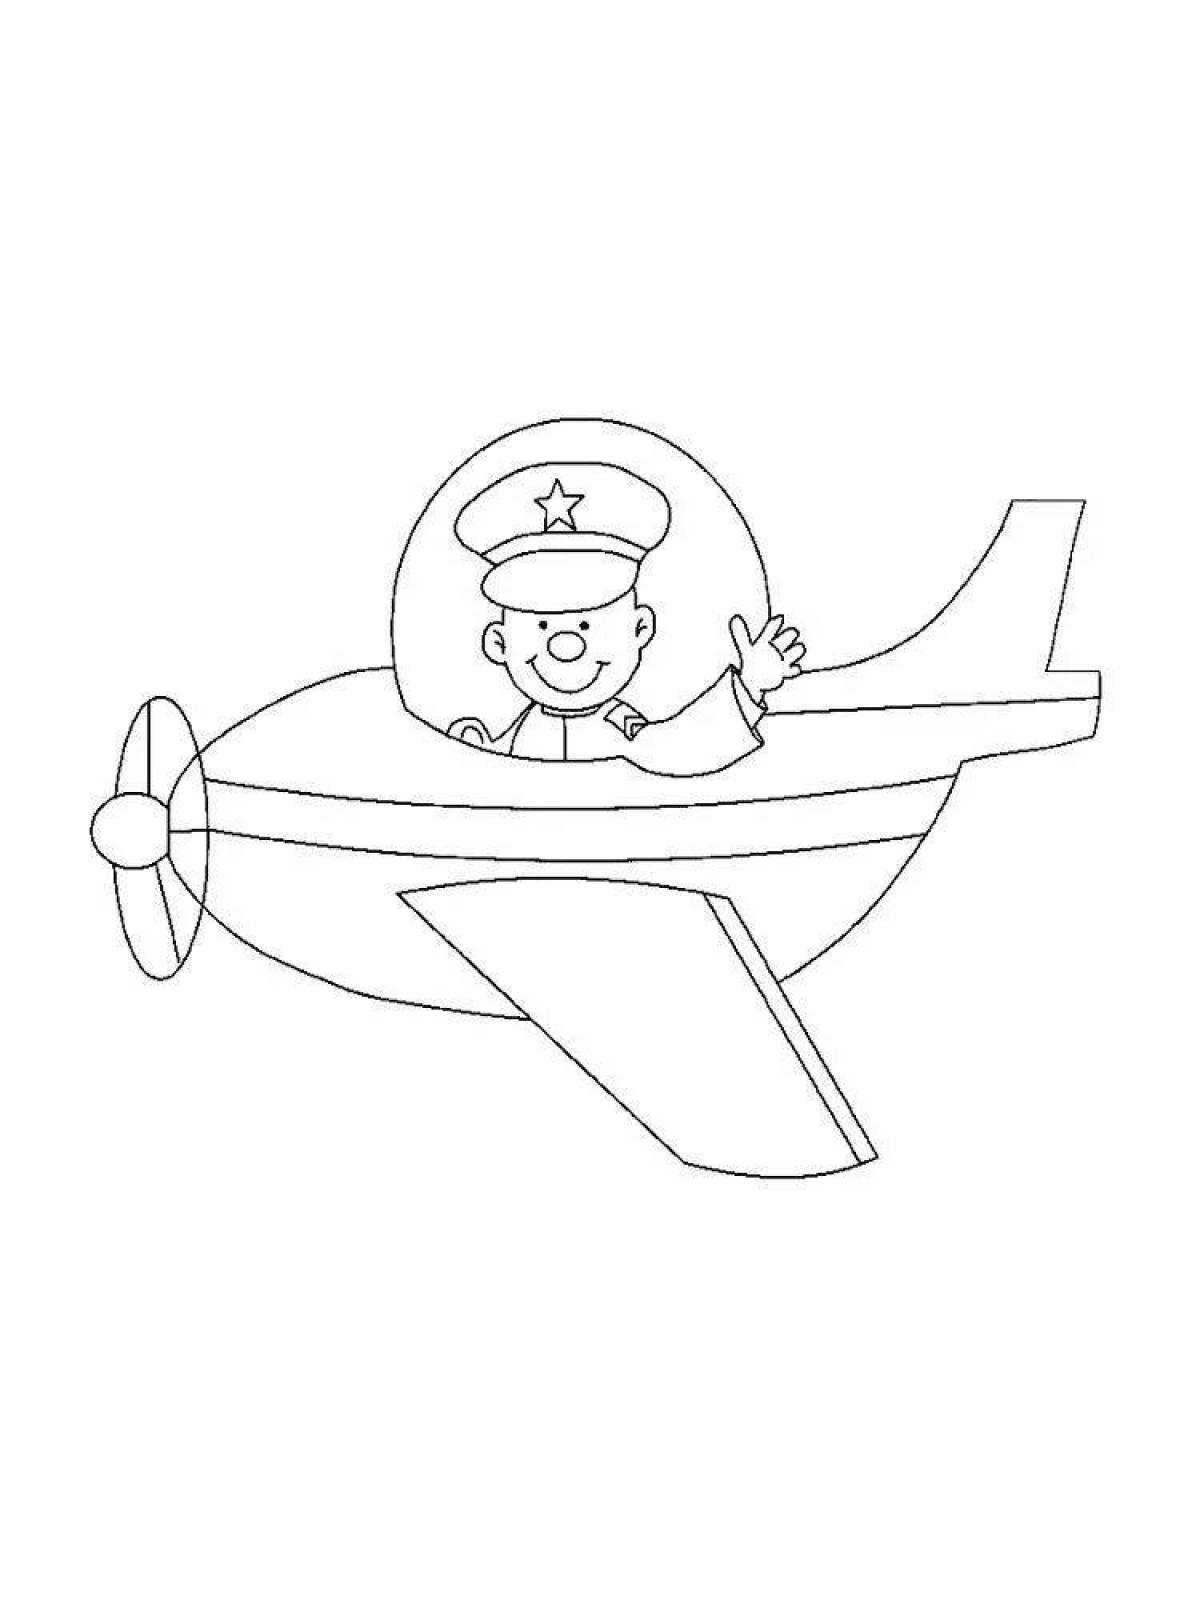 Fun Pilot Coloring Page